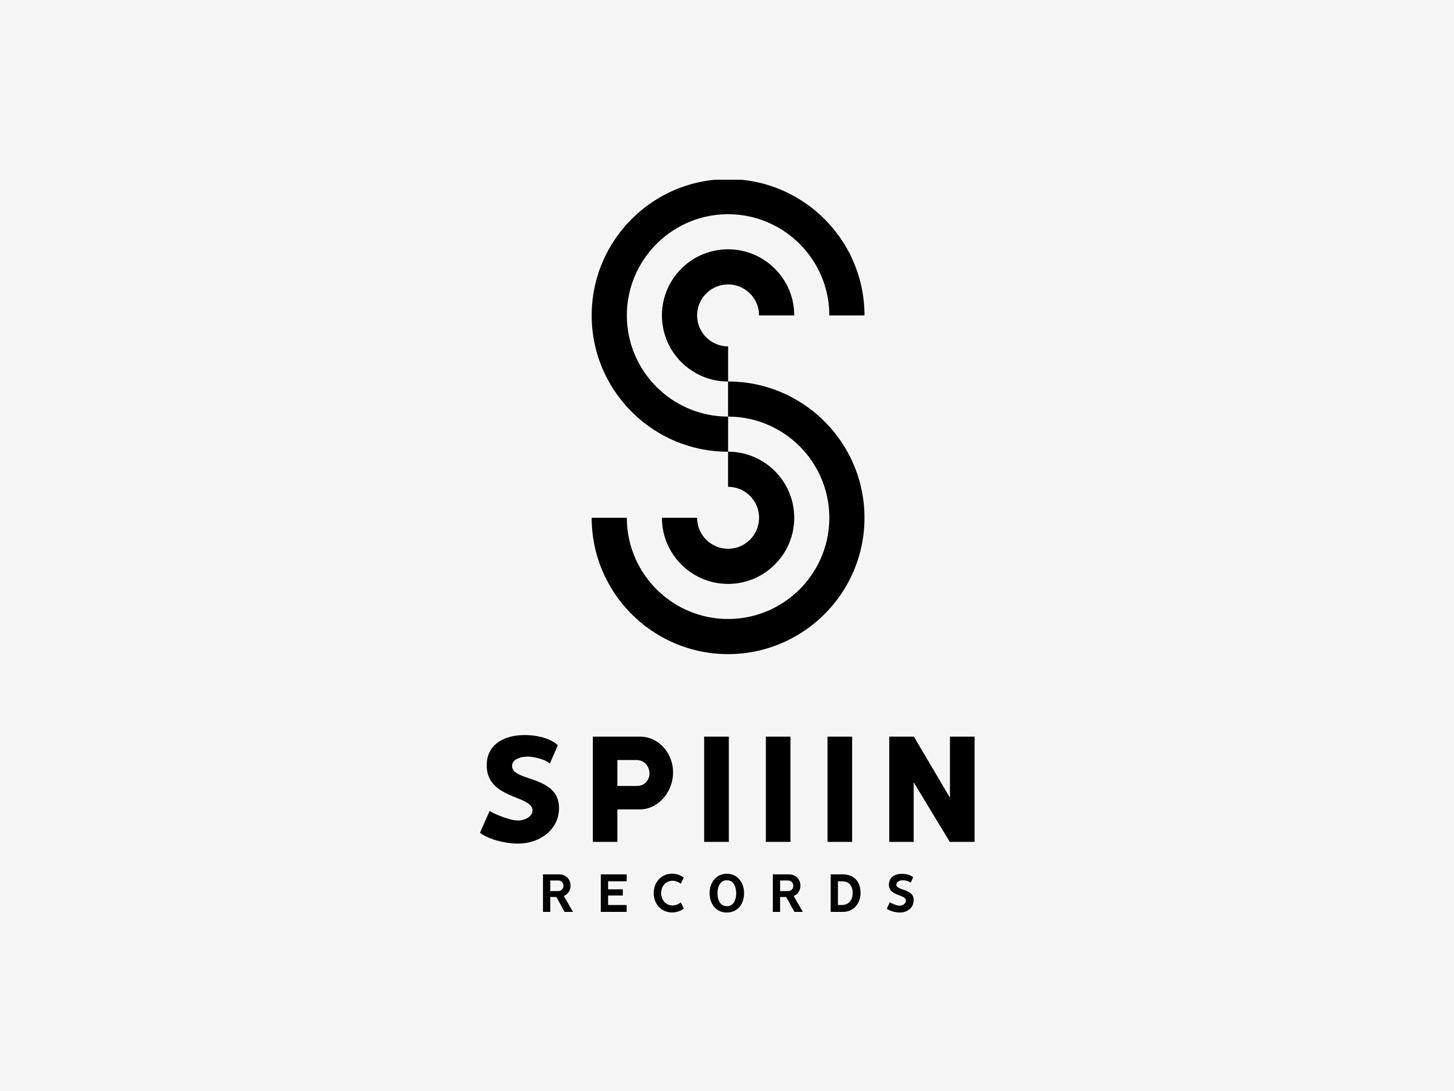 Dribbble - spiiin-records-logo.png by Neeko David